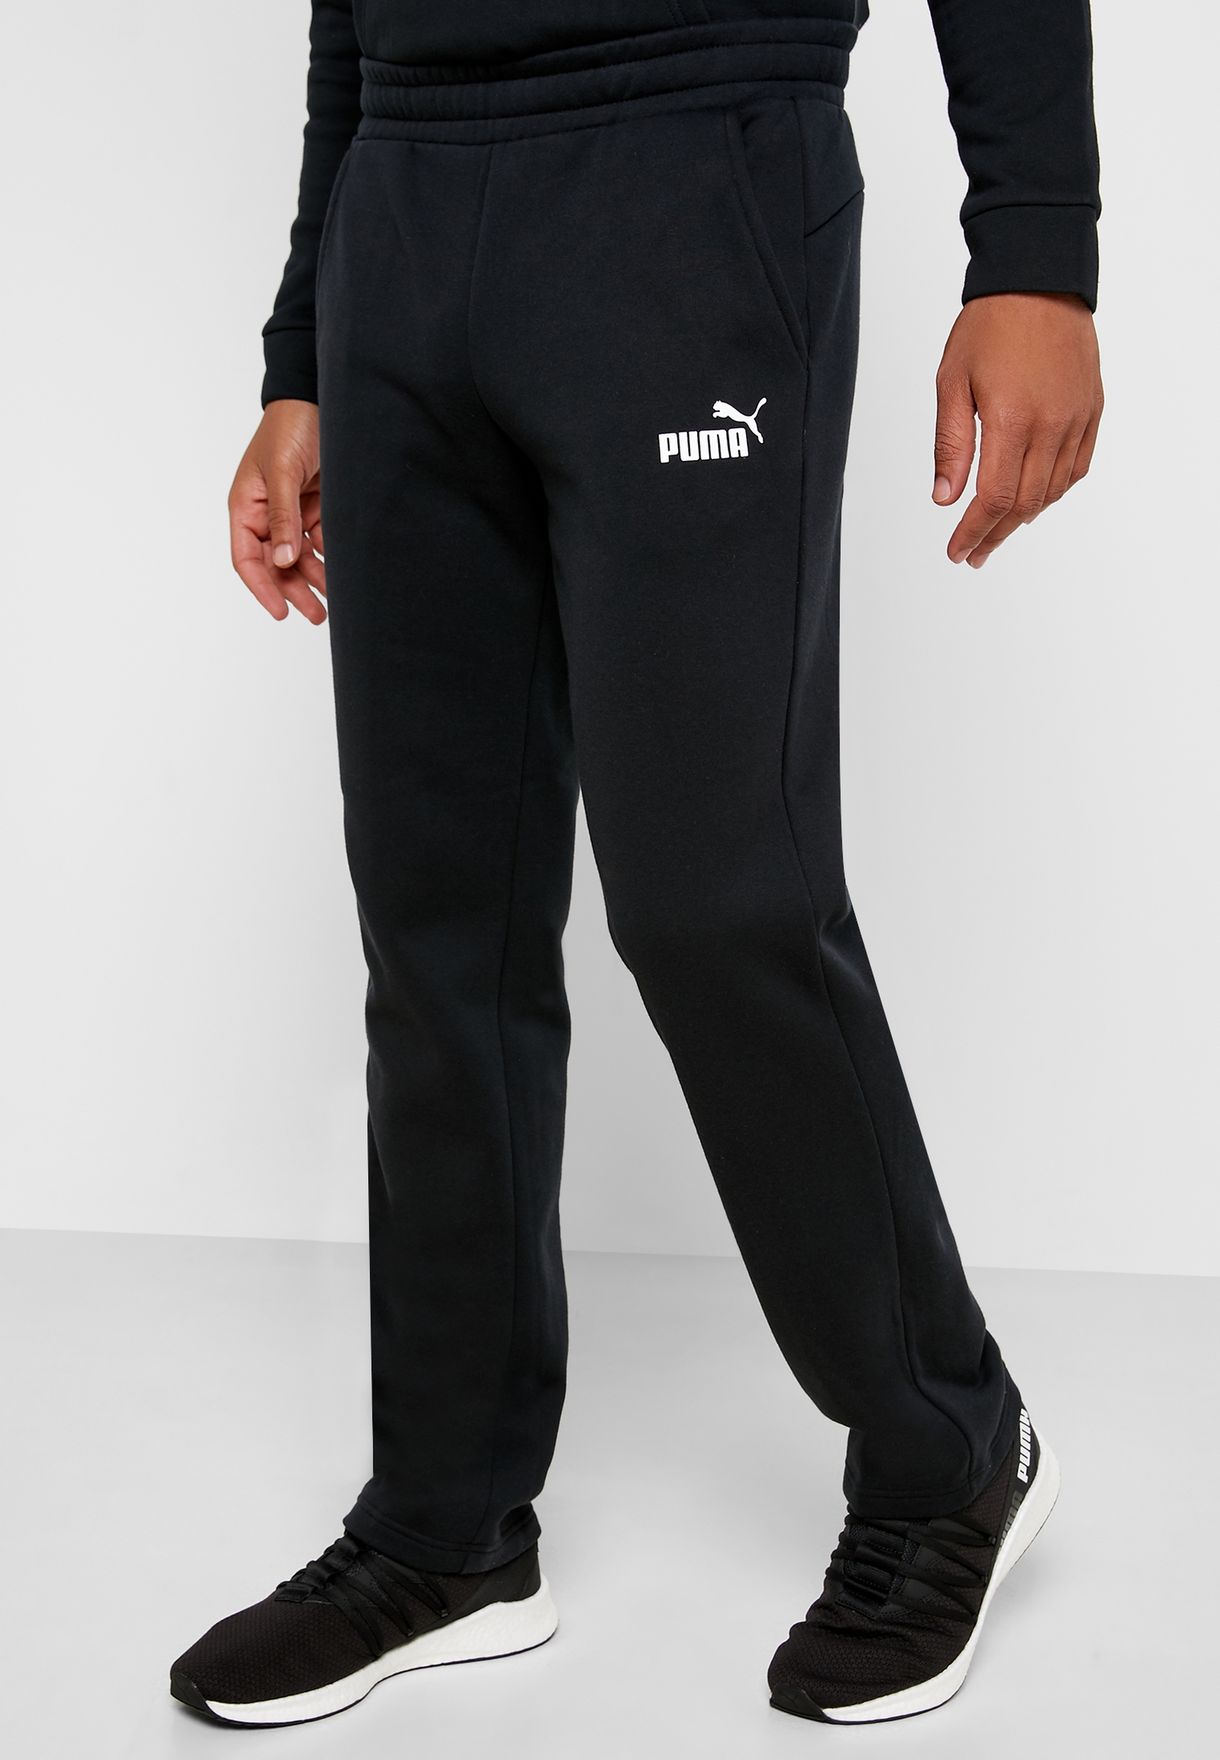 puma essential logo pants